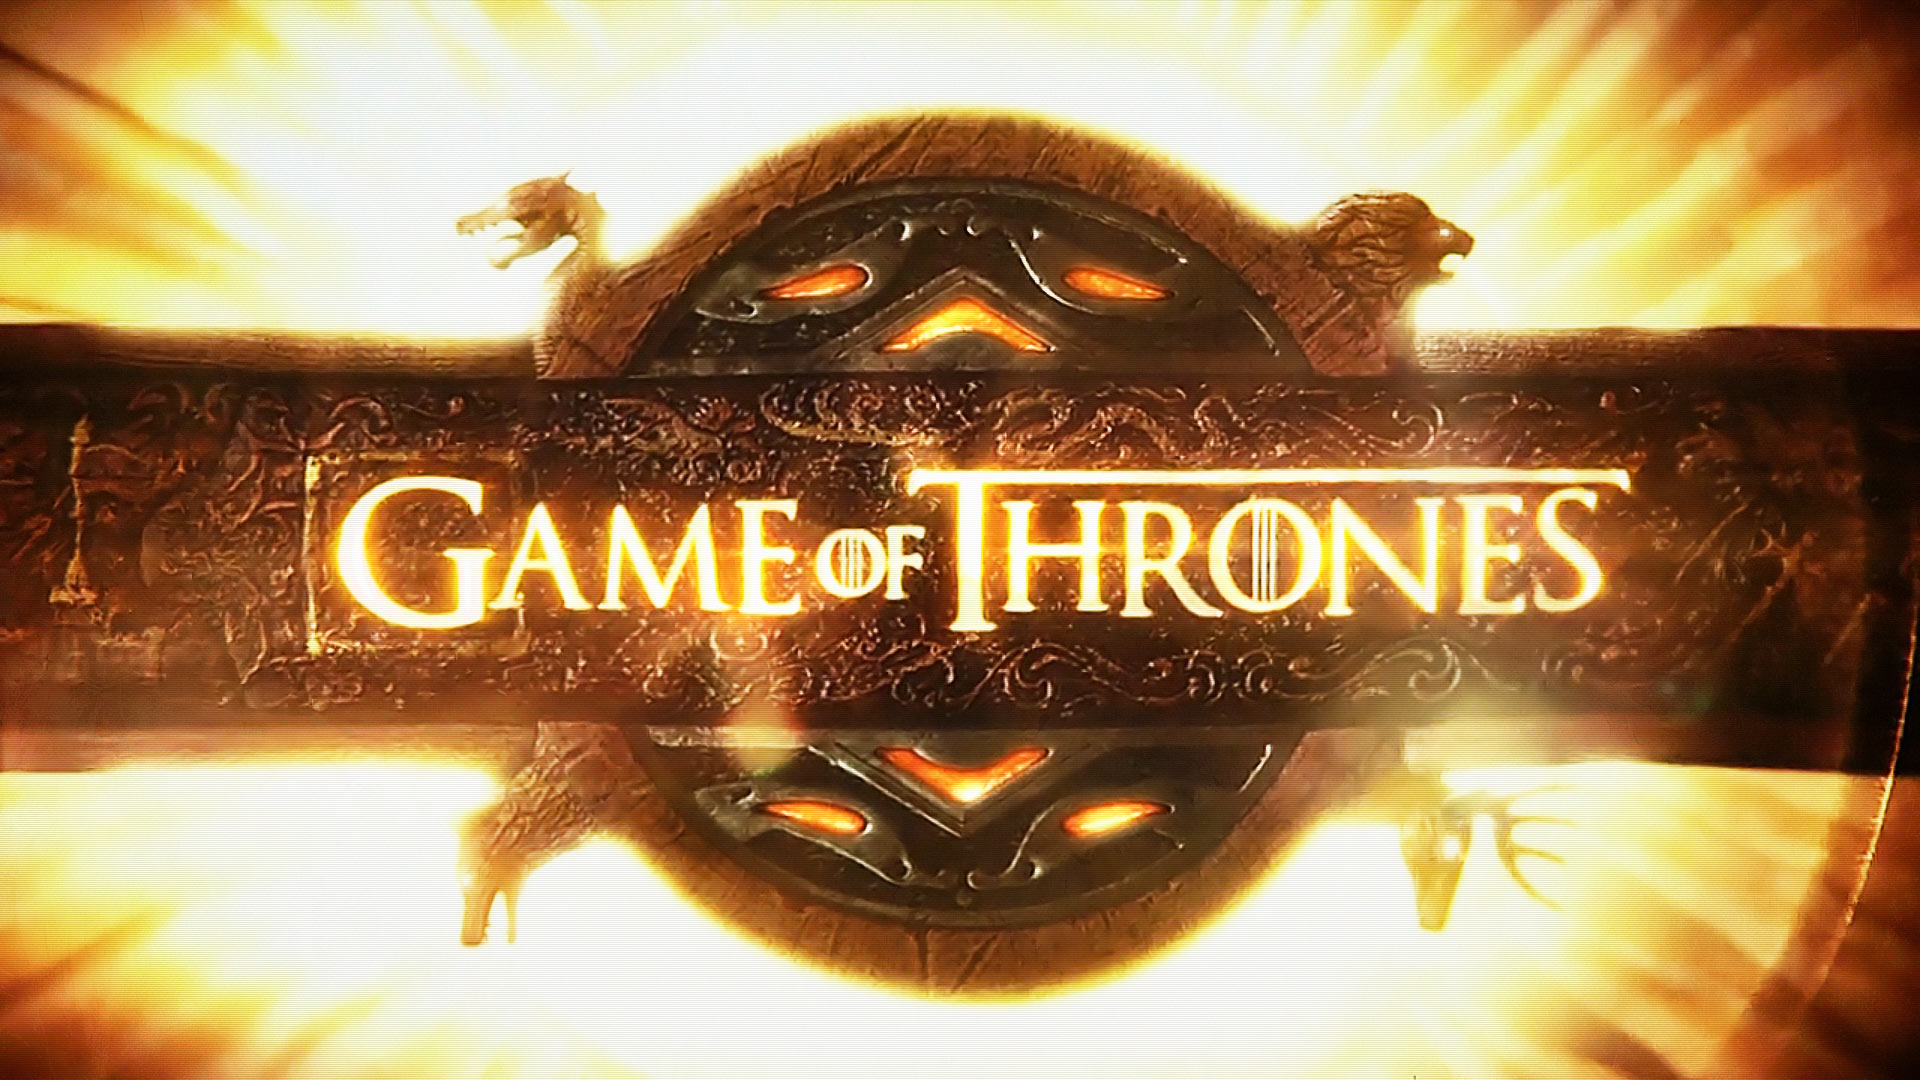 Full HD Wallpaper tv show, game of thrones